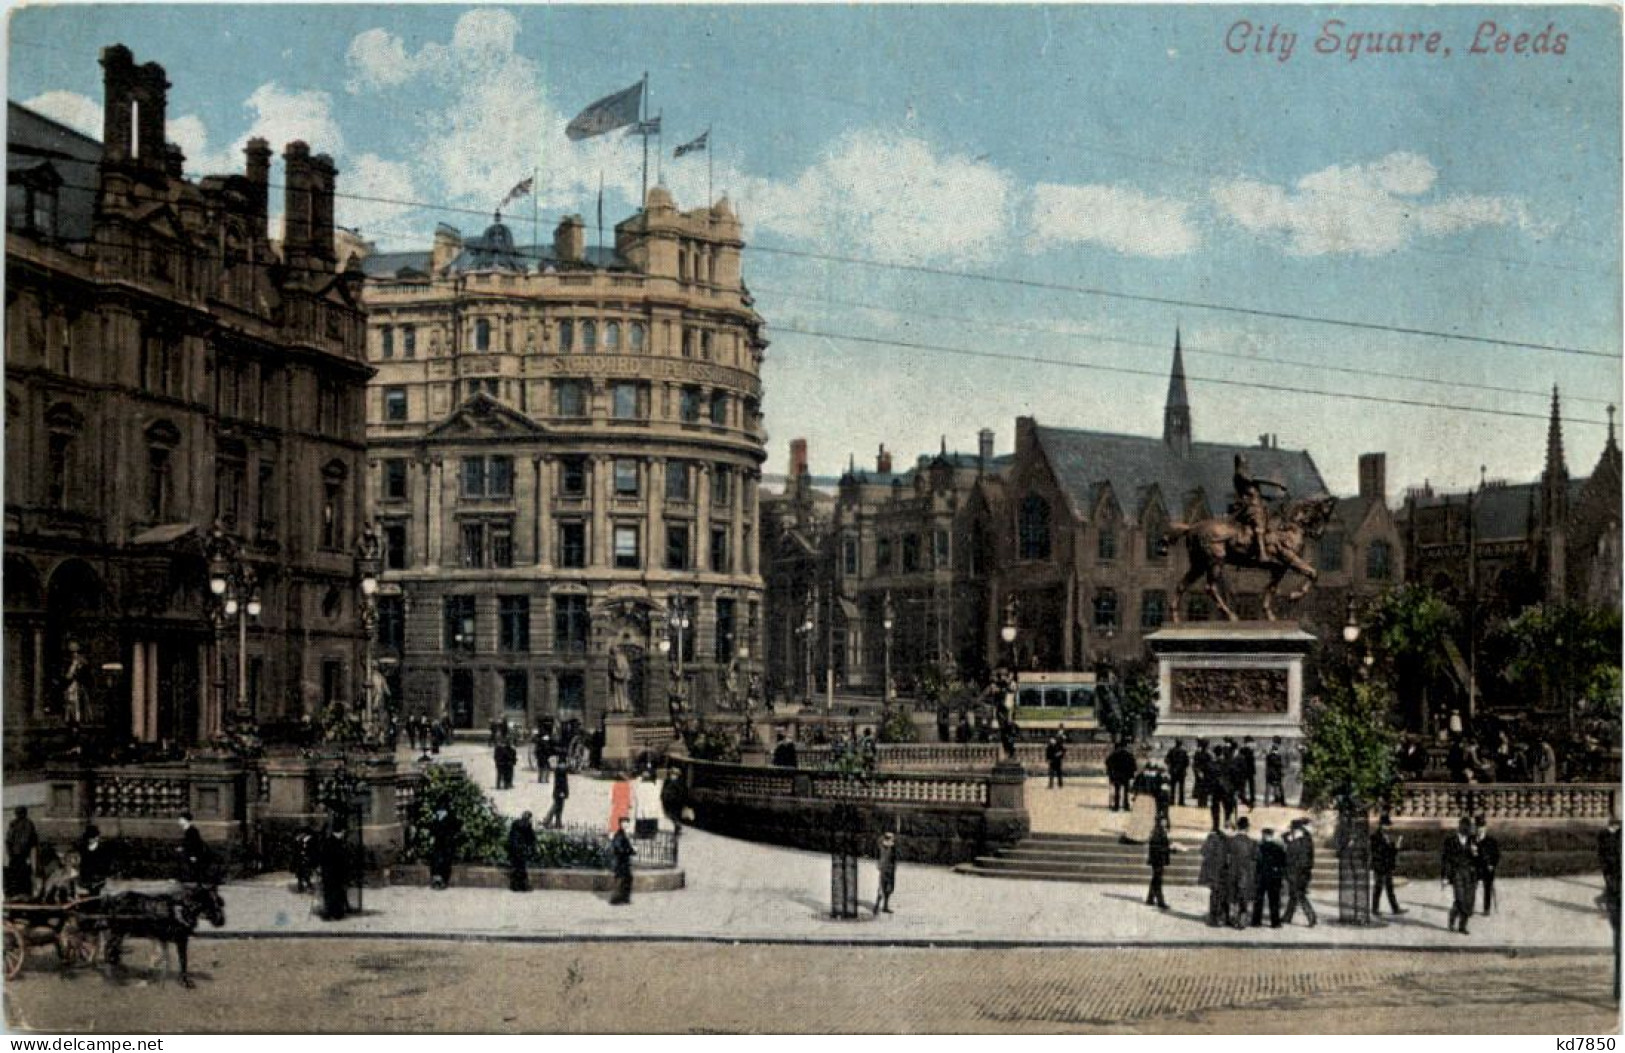 Leeds - City Square - Leeds